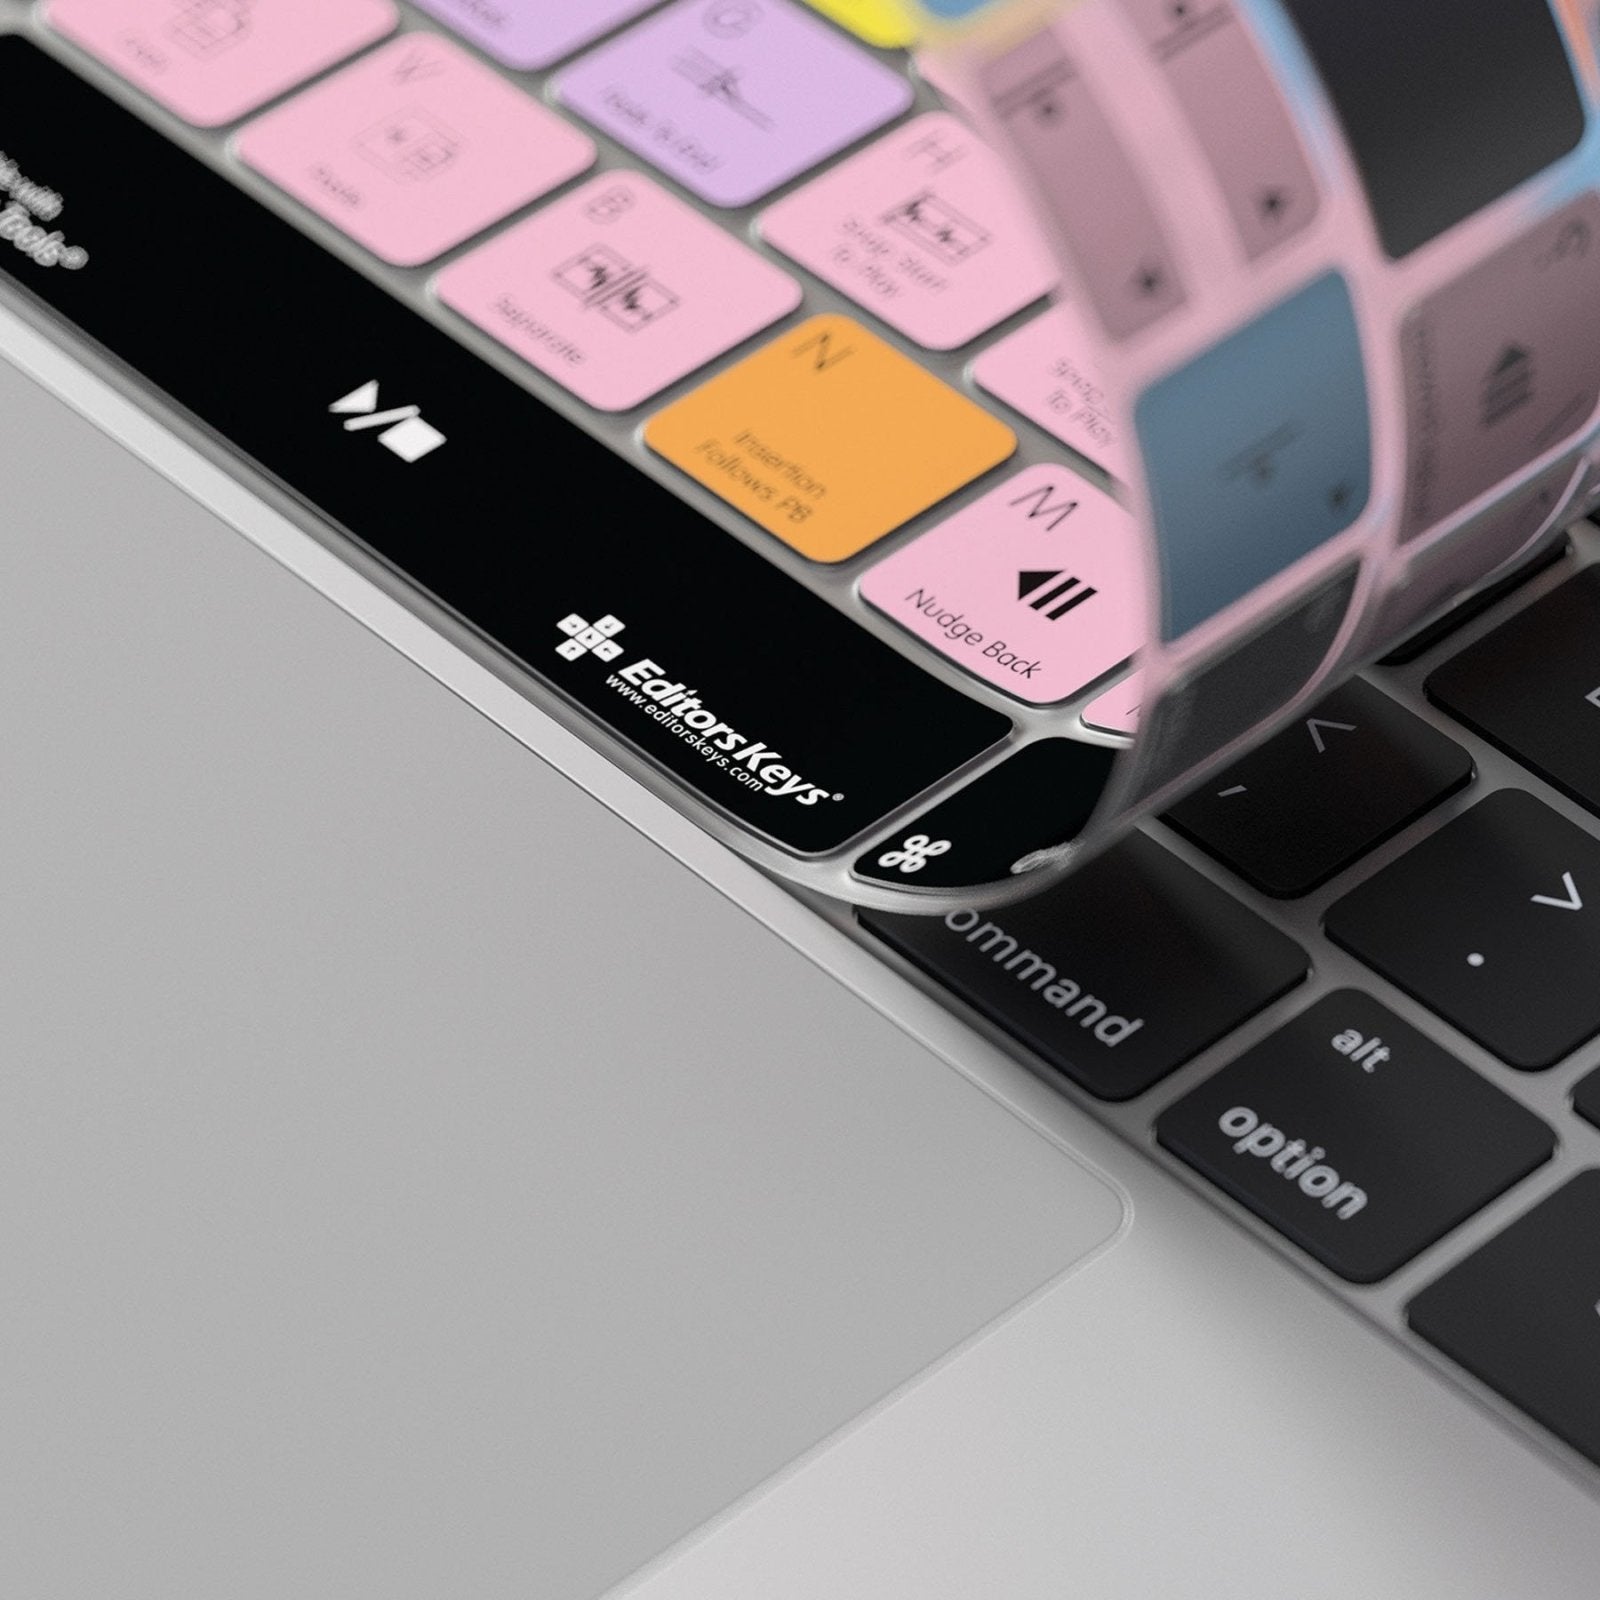 Avid Pro Tools Keyboard Covers for MacBook and iMac - Editors Keys